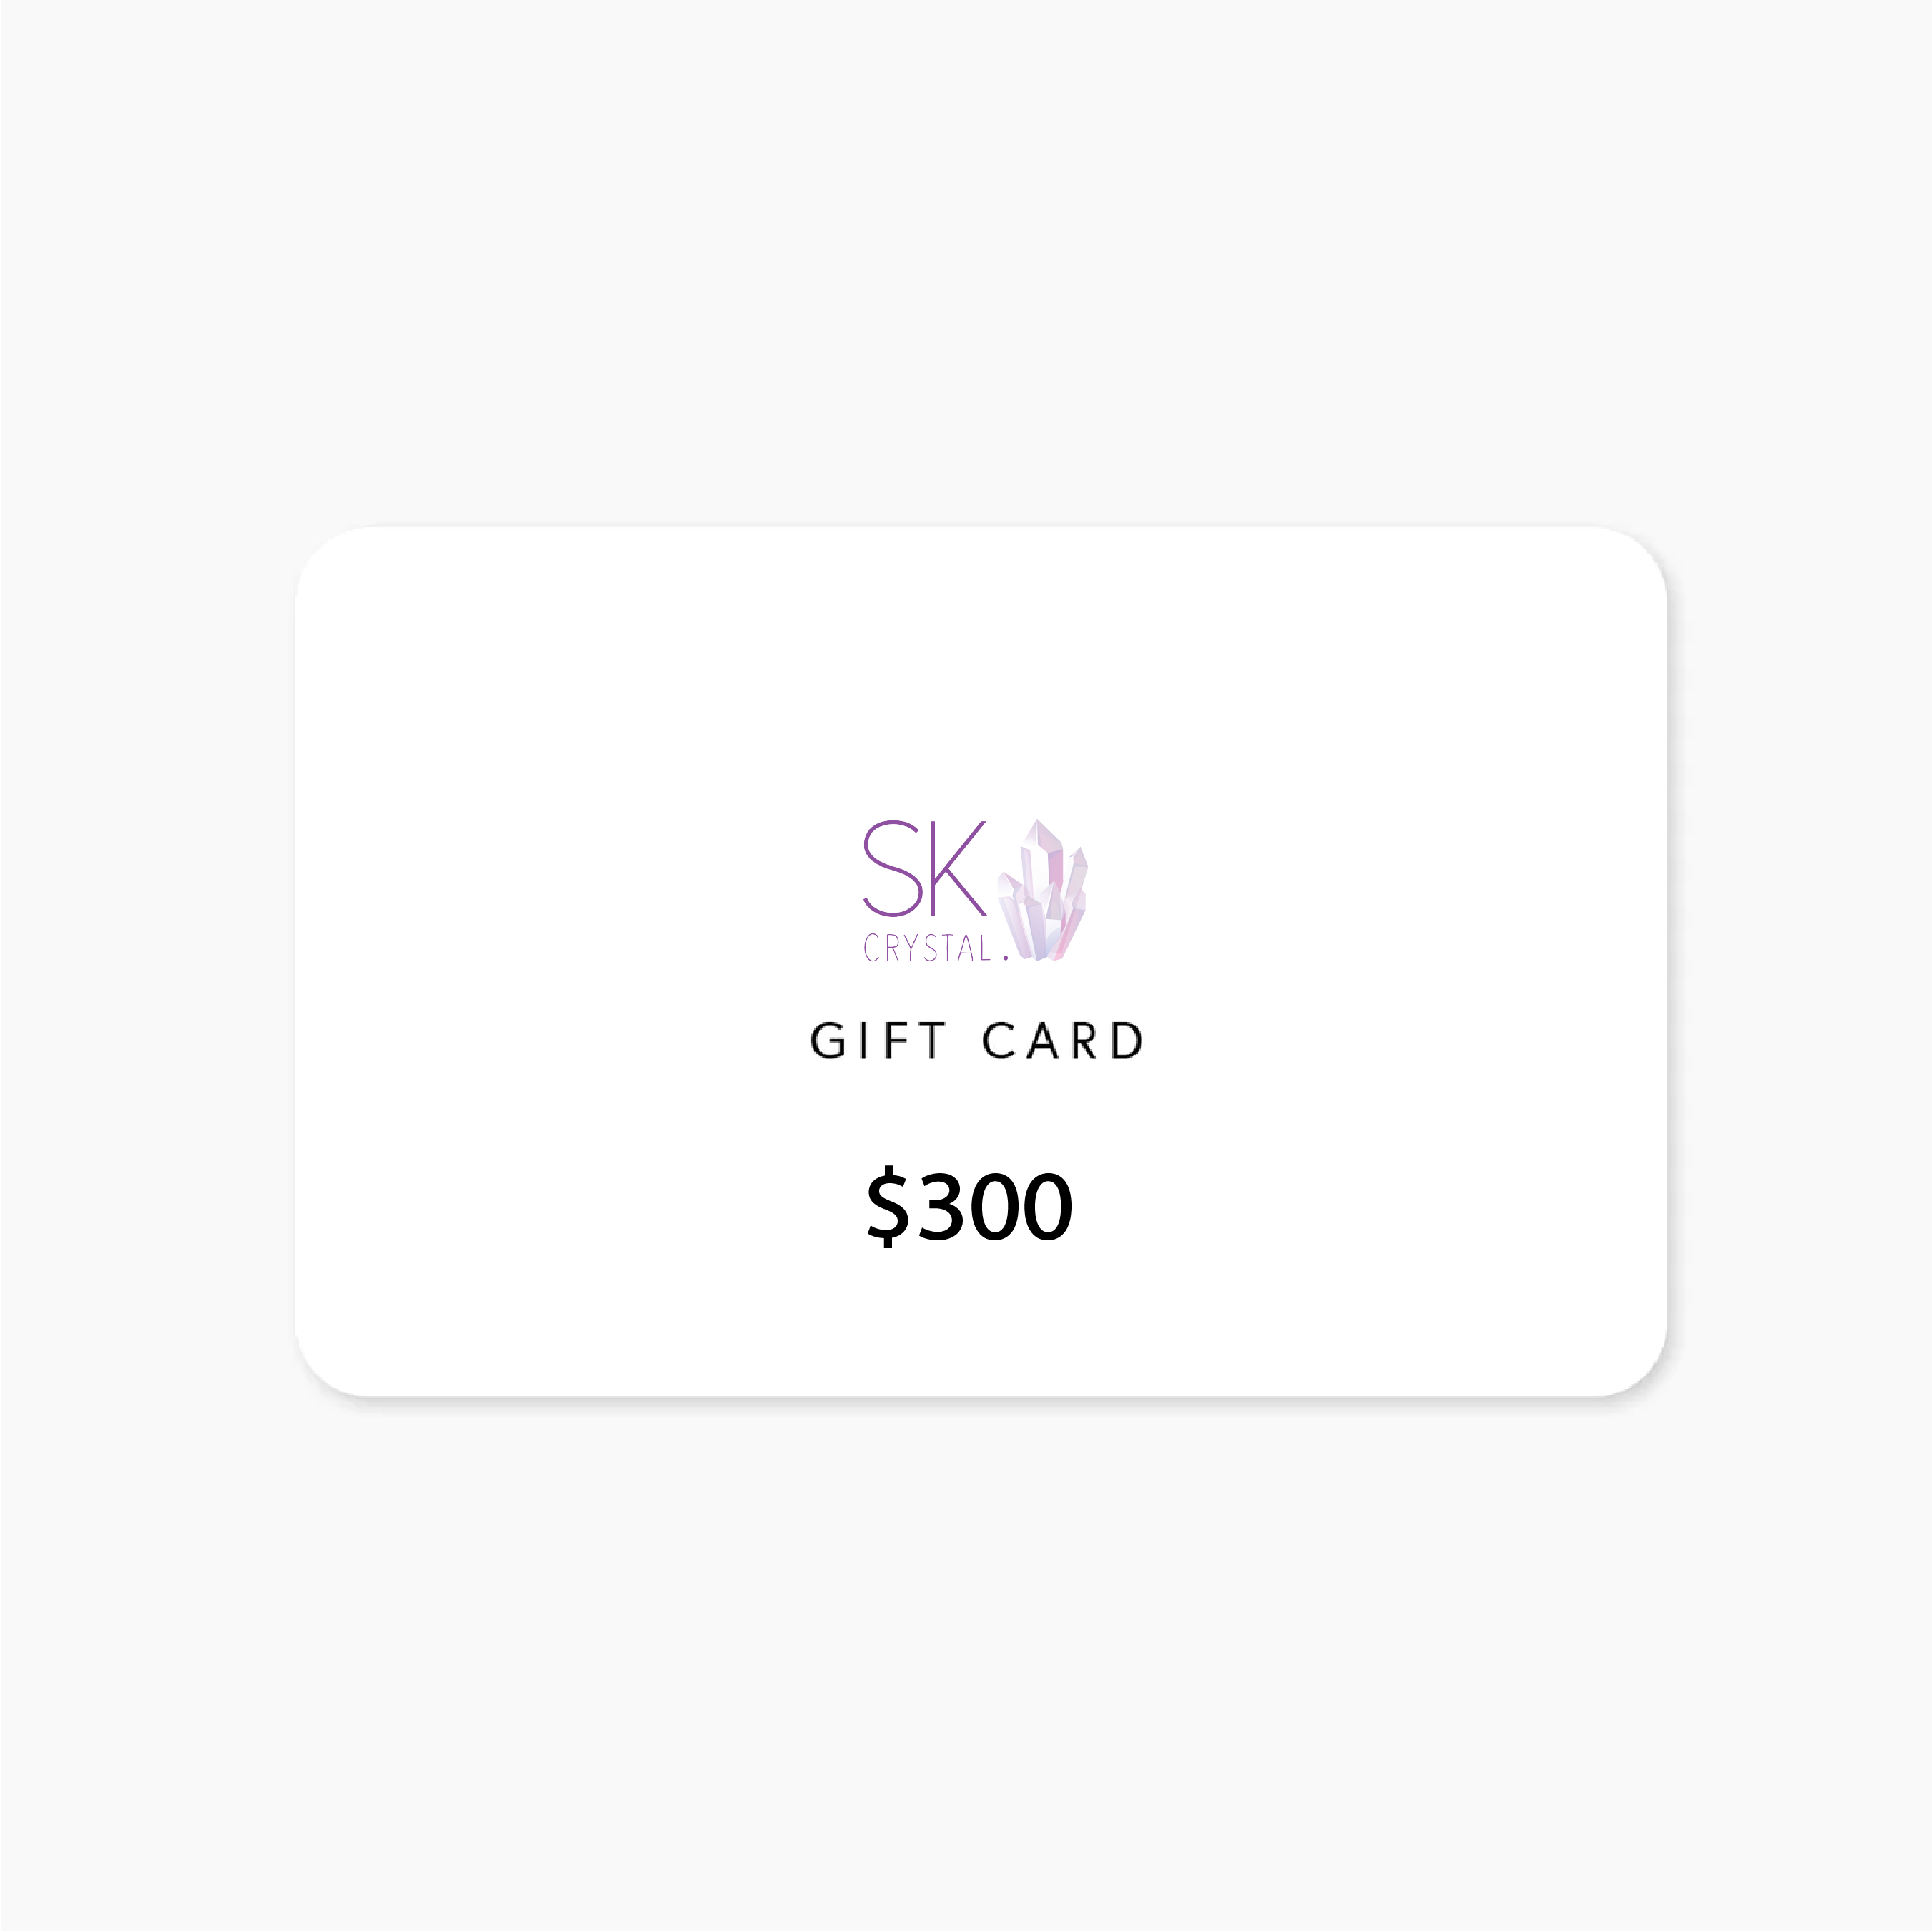 GIFT CARD $300